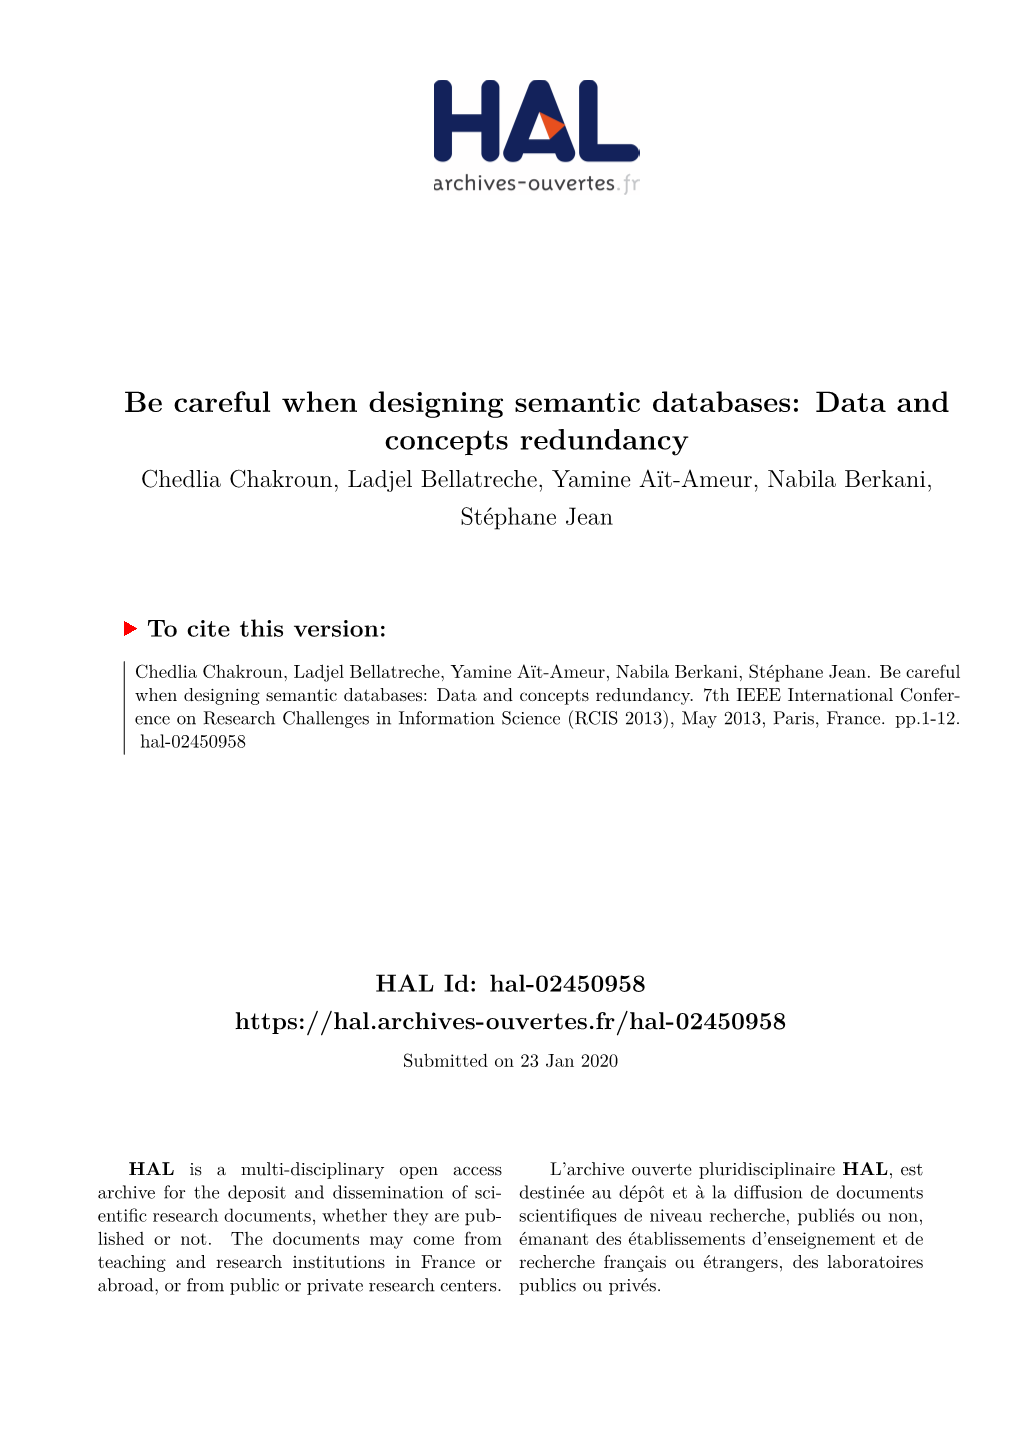 Be Careful When Designing Semantic Databases: Data and Concepts Redundancy Chedlia Chakroun, Ladjel Bellatreche, Yamine Aït-Ameur, Nabila Berkani, Stéphane Jean